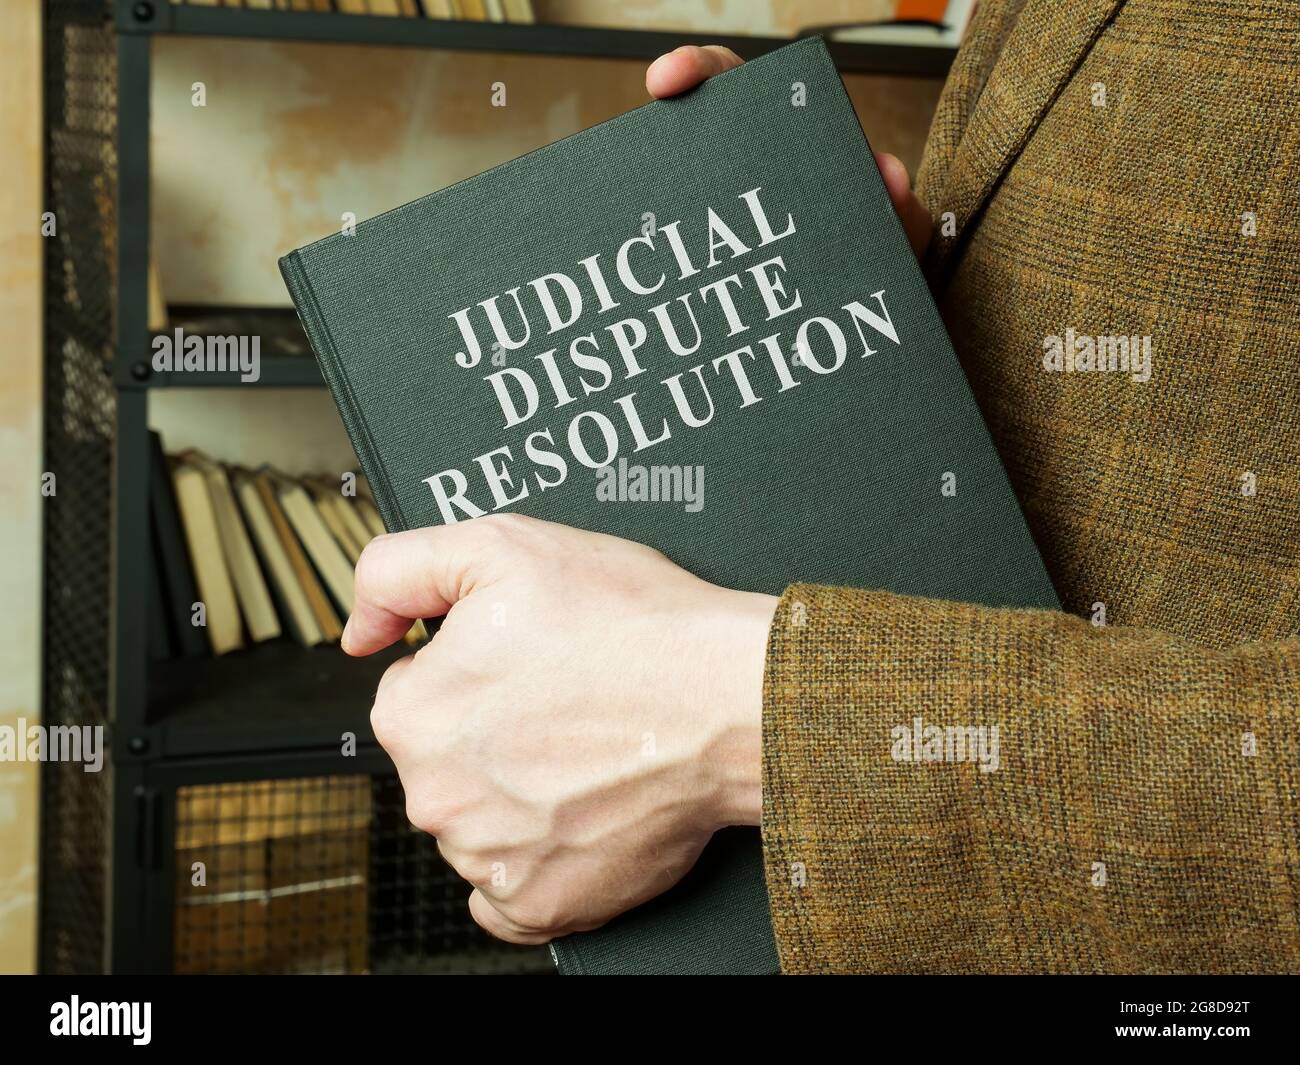 Man shows judicial dispute resolution JDR book. Stock Photo